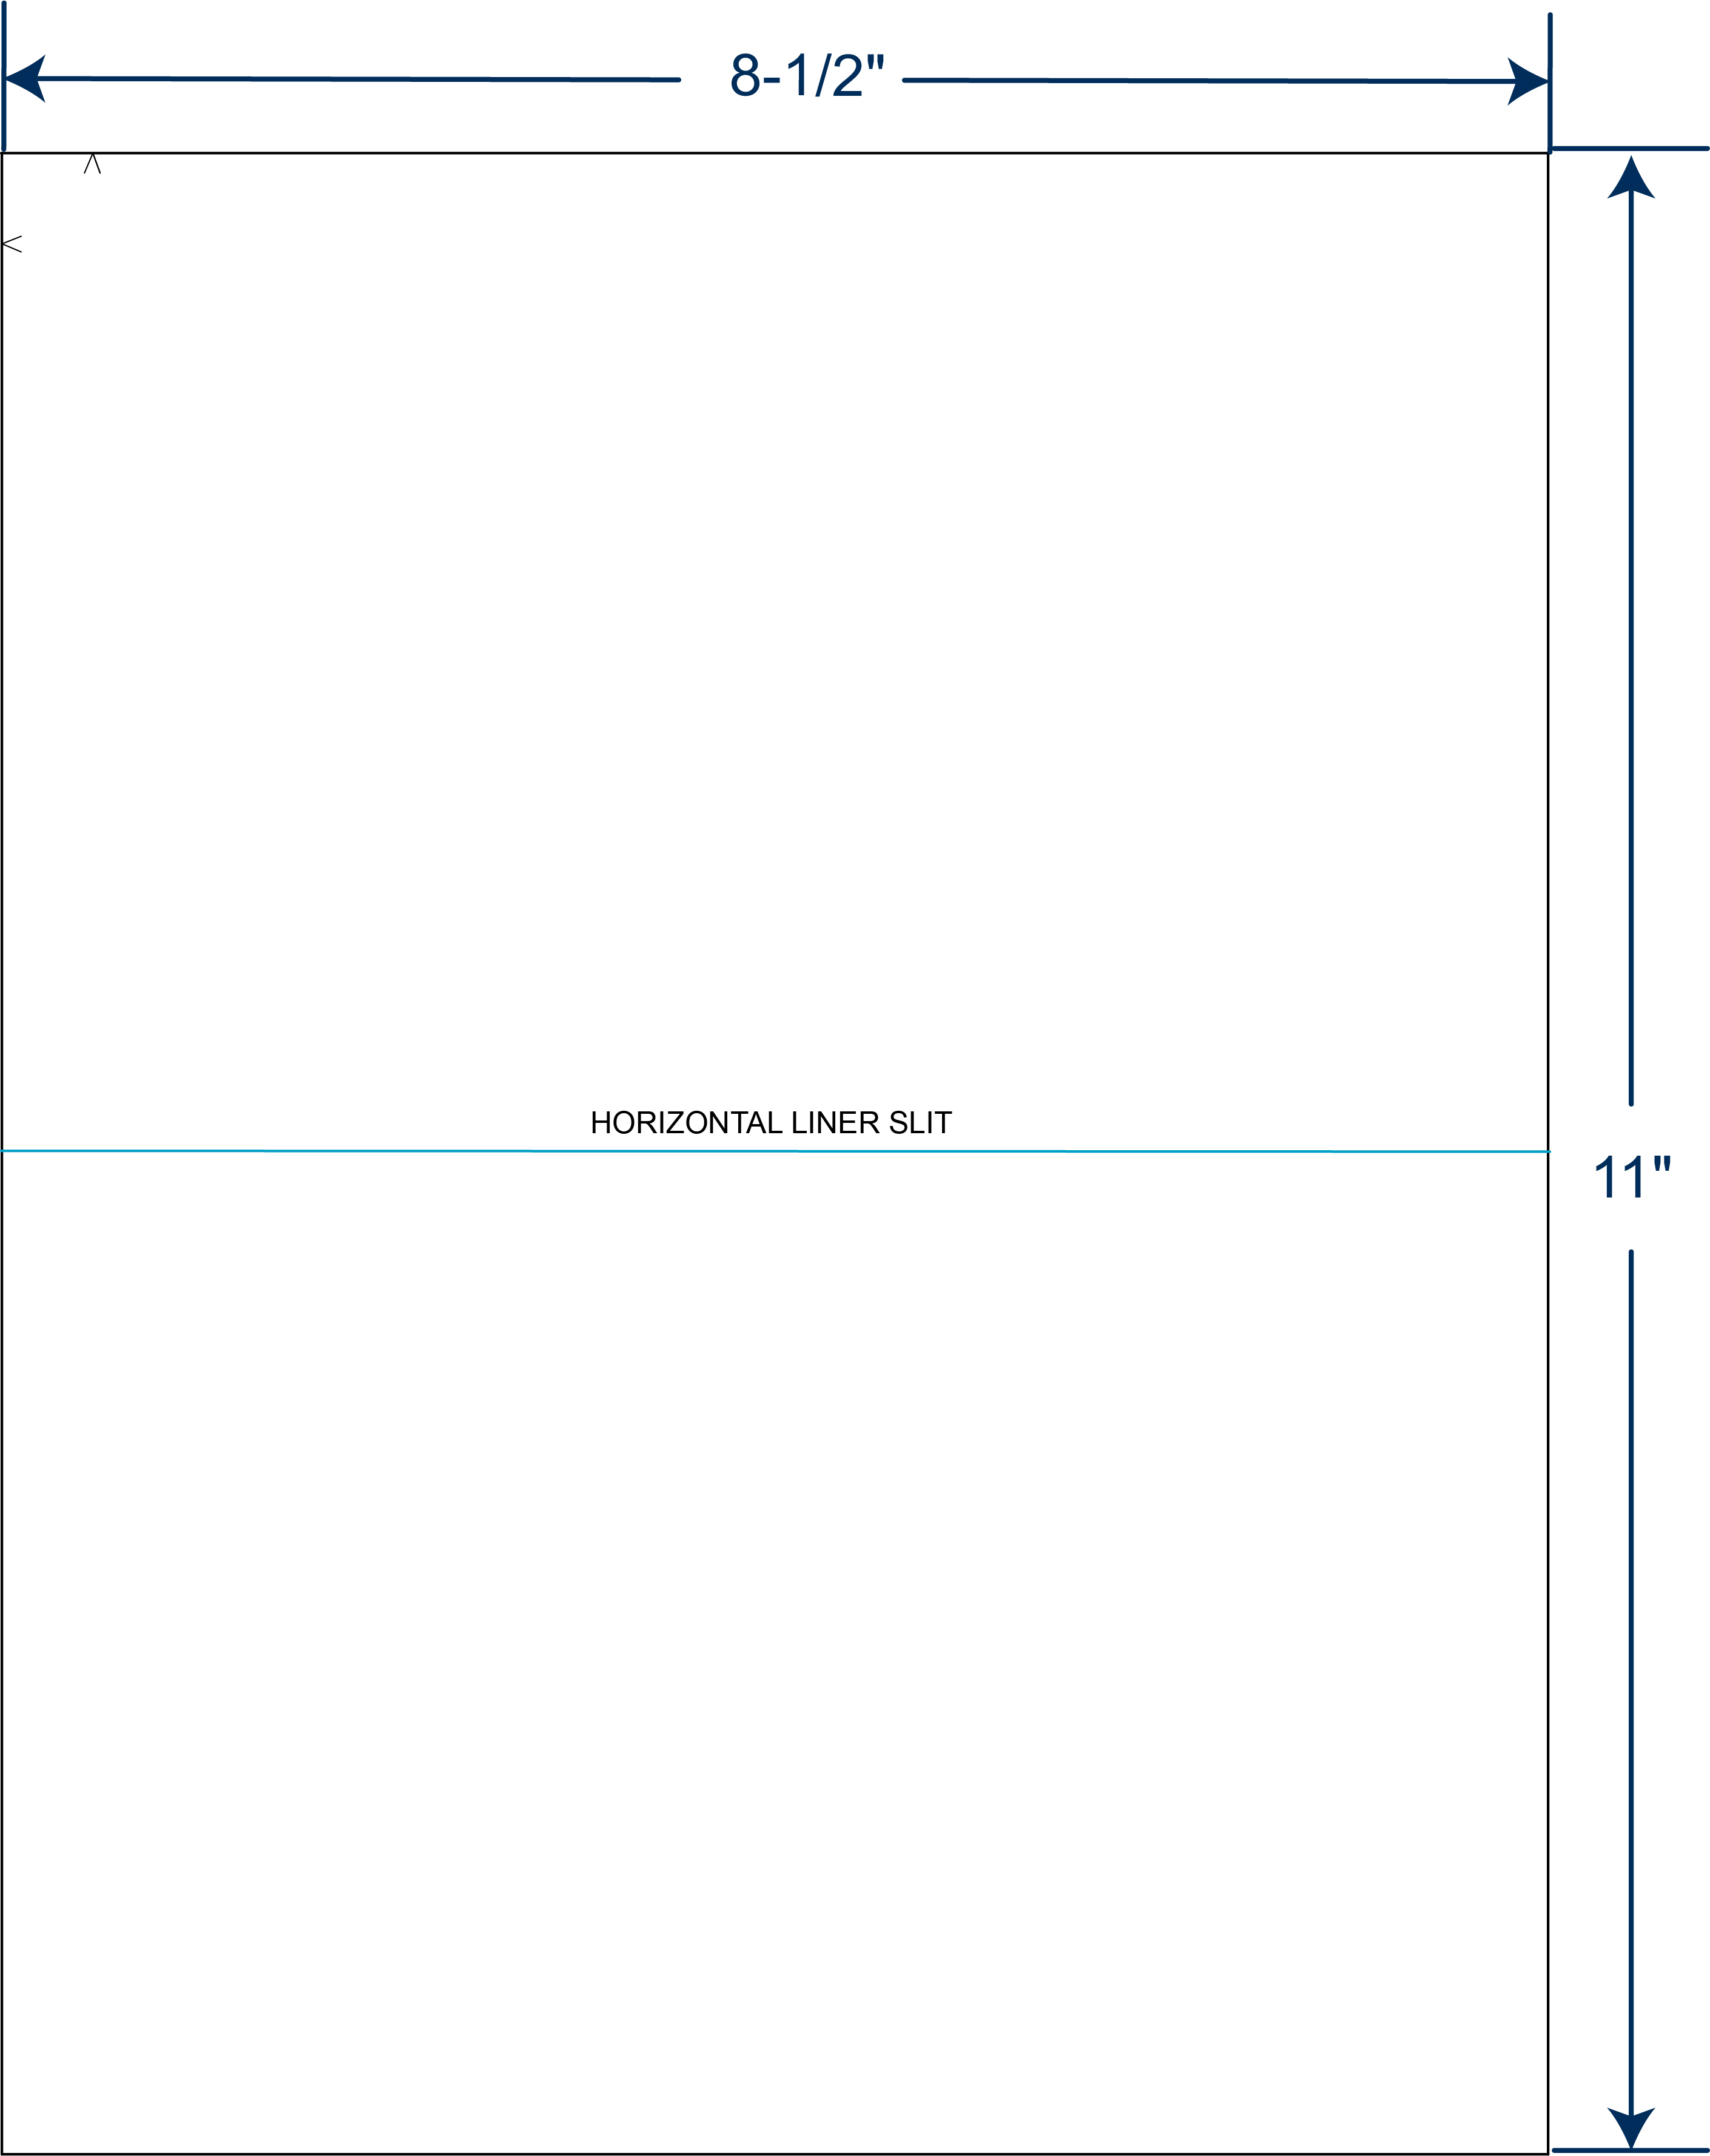 8-1/2" x 11" Horizontal Liner Slit Sheeted Labels (250 Sheets)